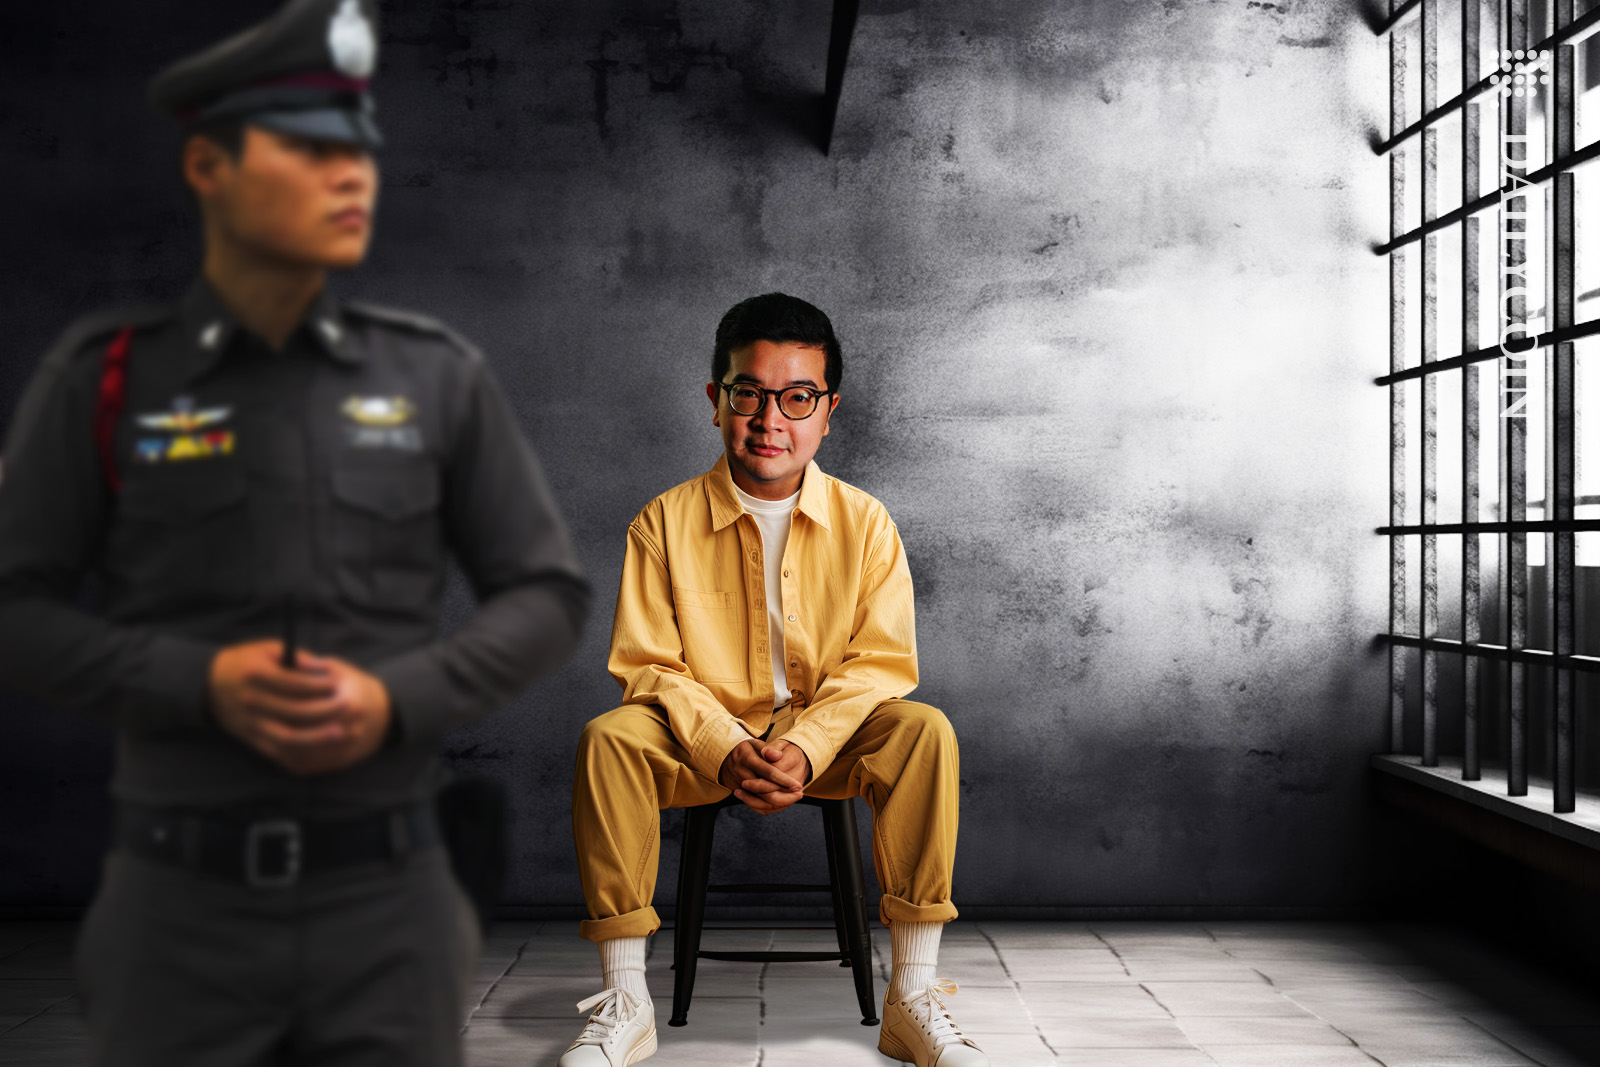 Thai Police has a put Ex-Zipmex Thailand CEO Akalarp Yimwilai in prison.